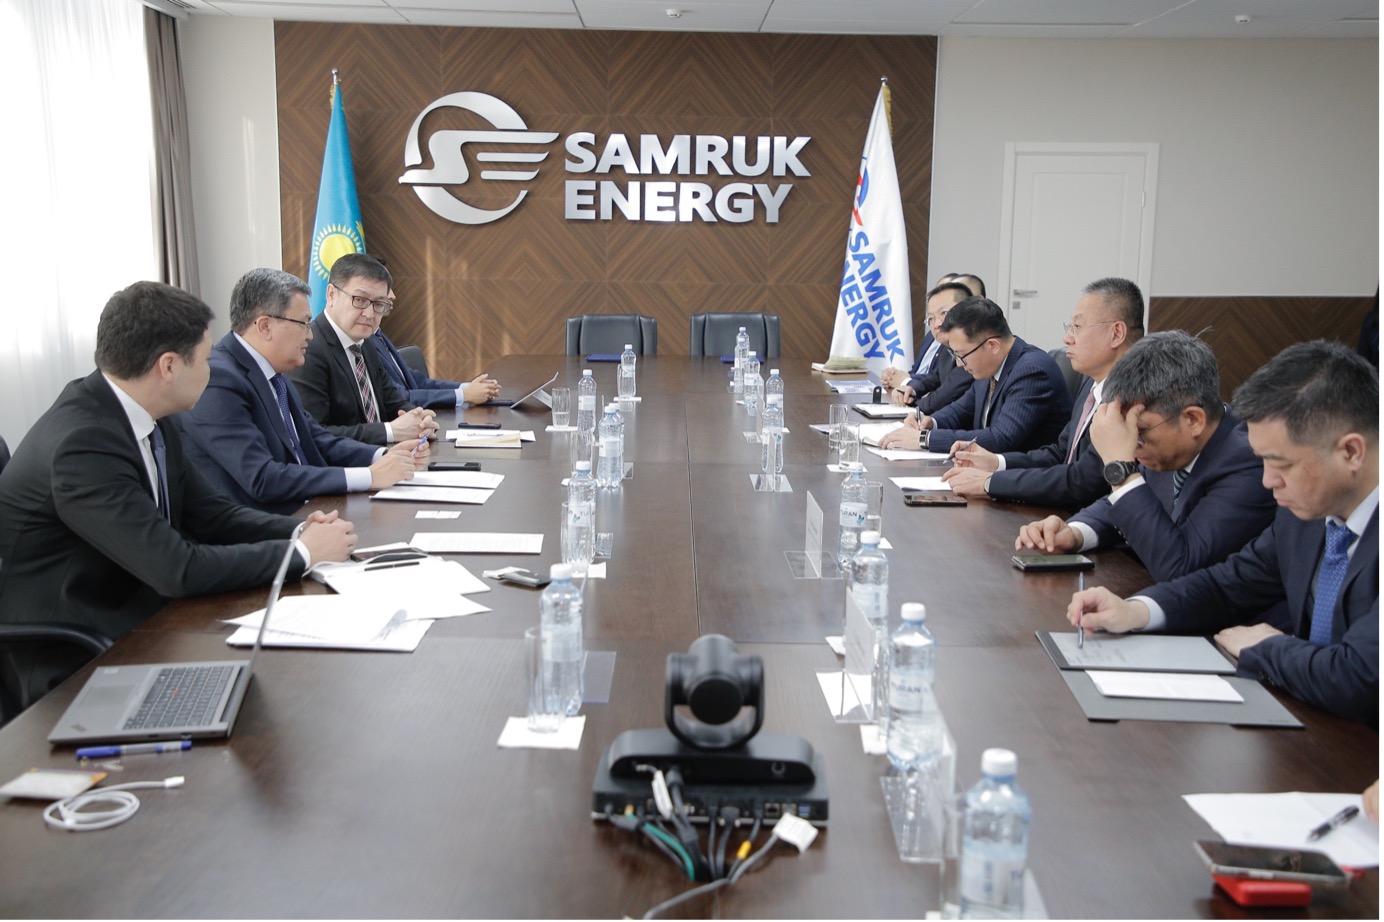 Samruk-Energy signs agreement with International Corporation for construction of Kazakhstan's first PSHPP